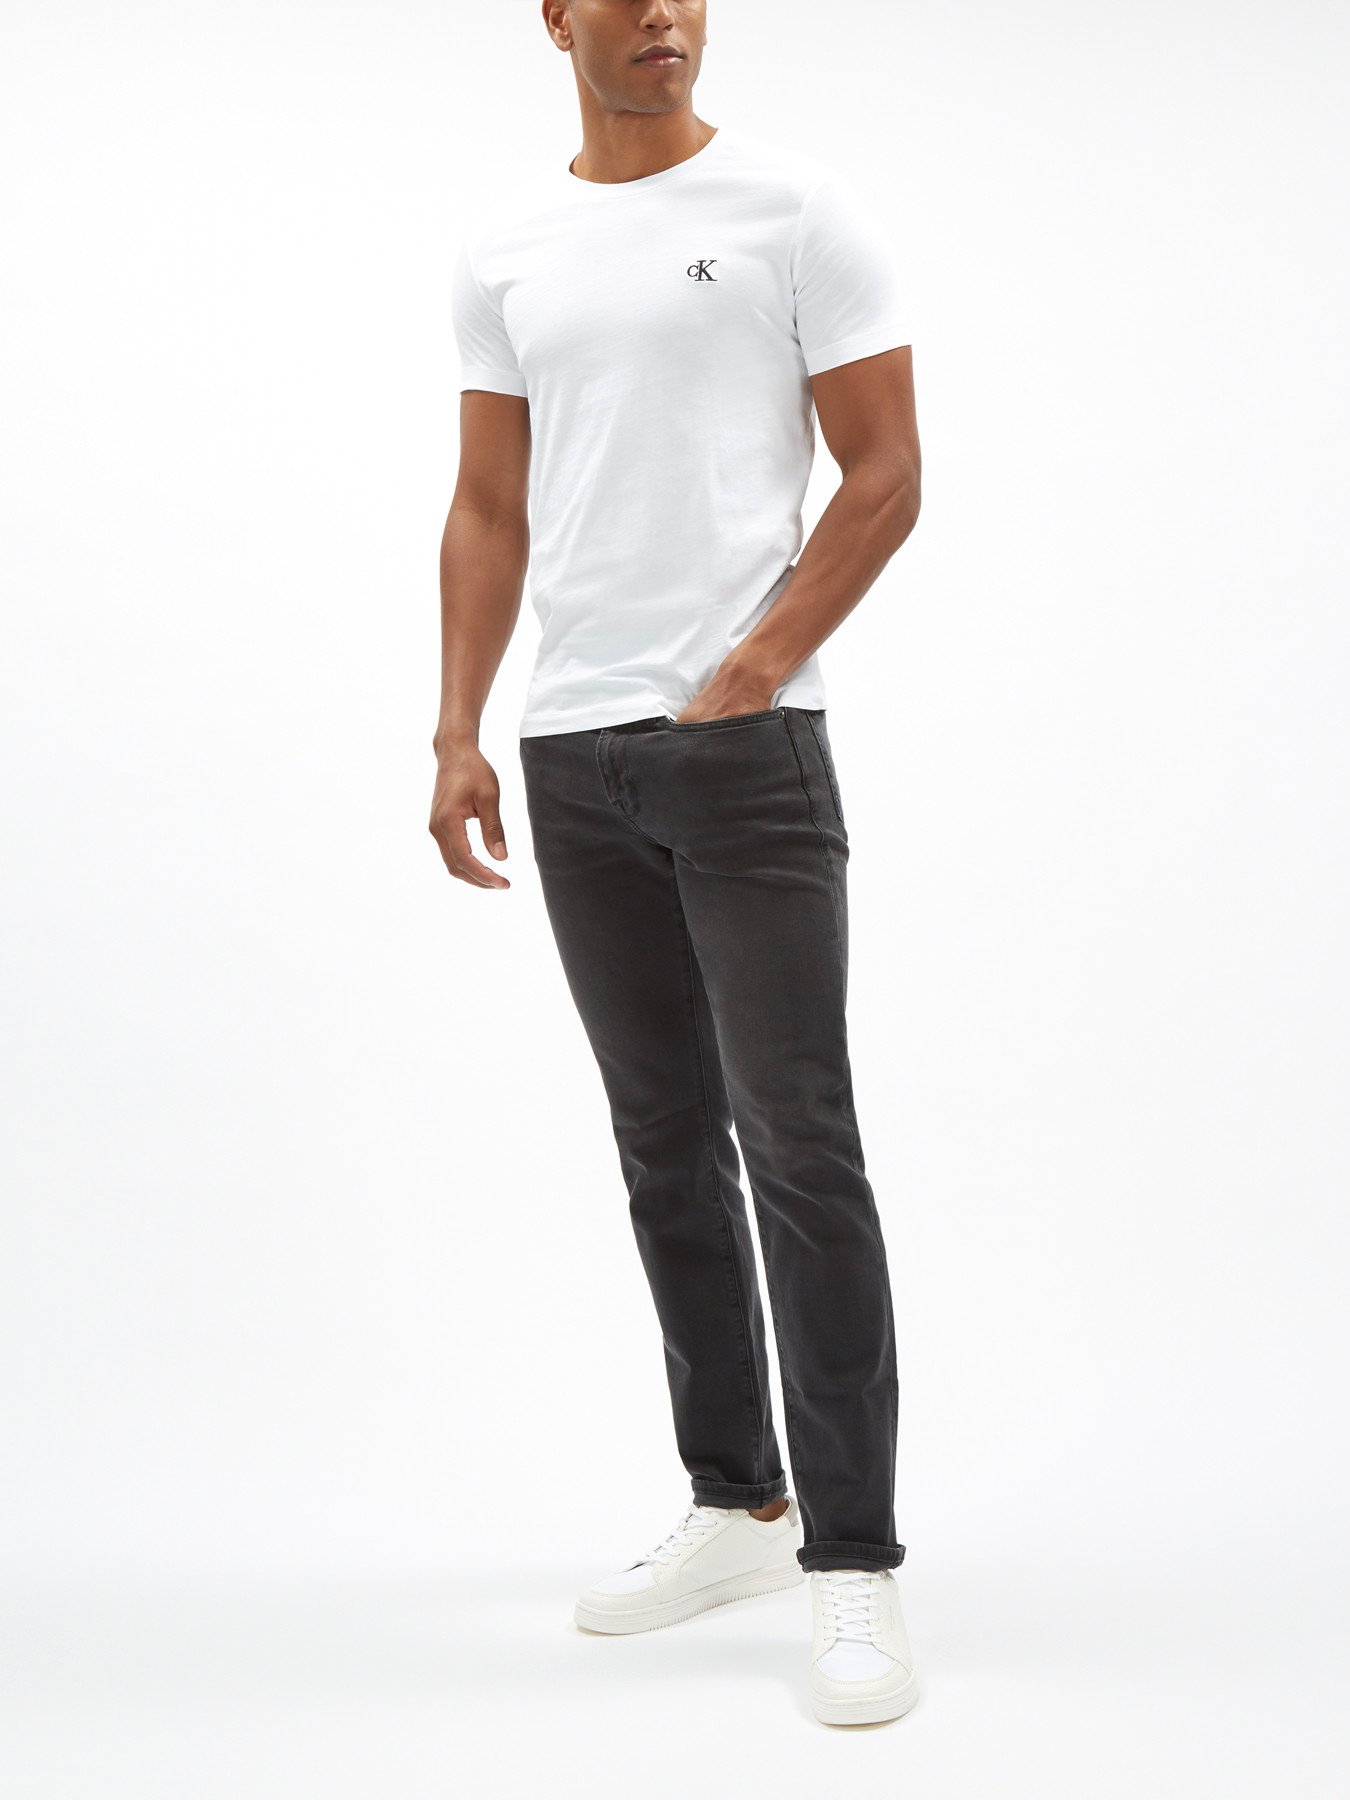 Men's Calvin Klein Jeans CK Logo Slim Fit T-Shirt | Fenwick